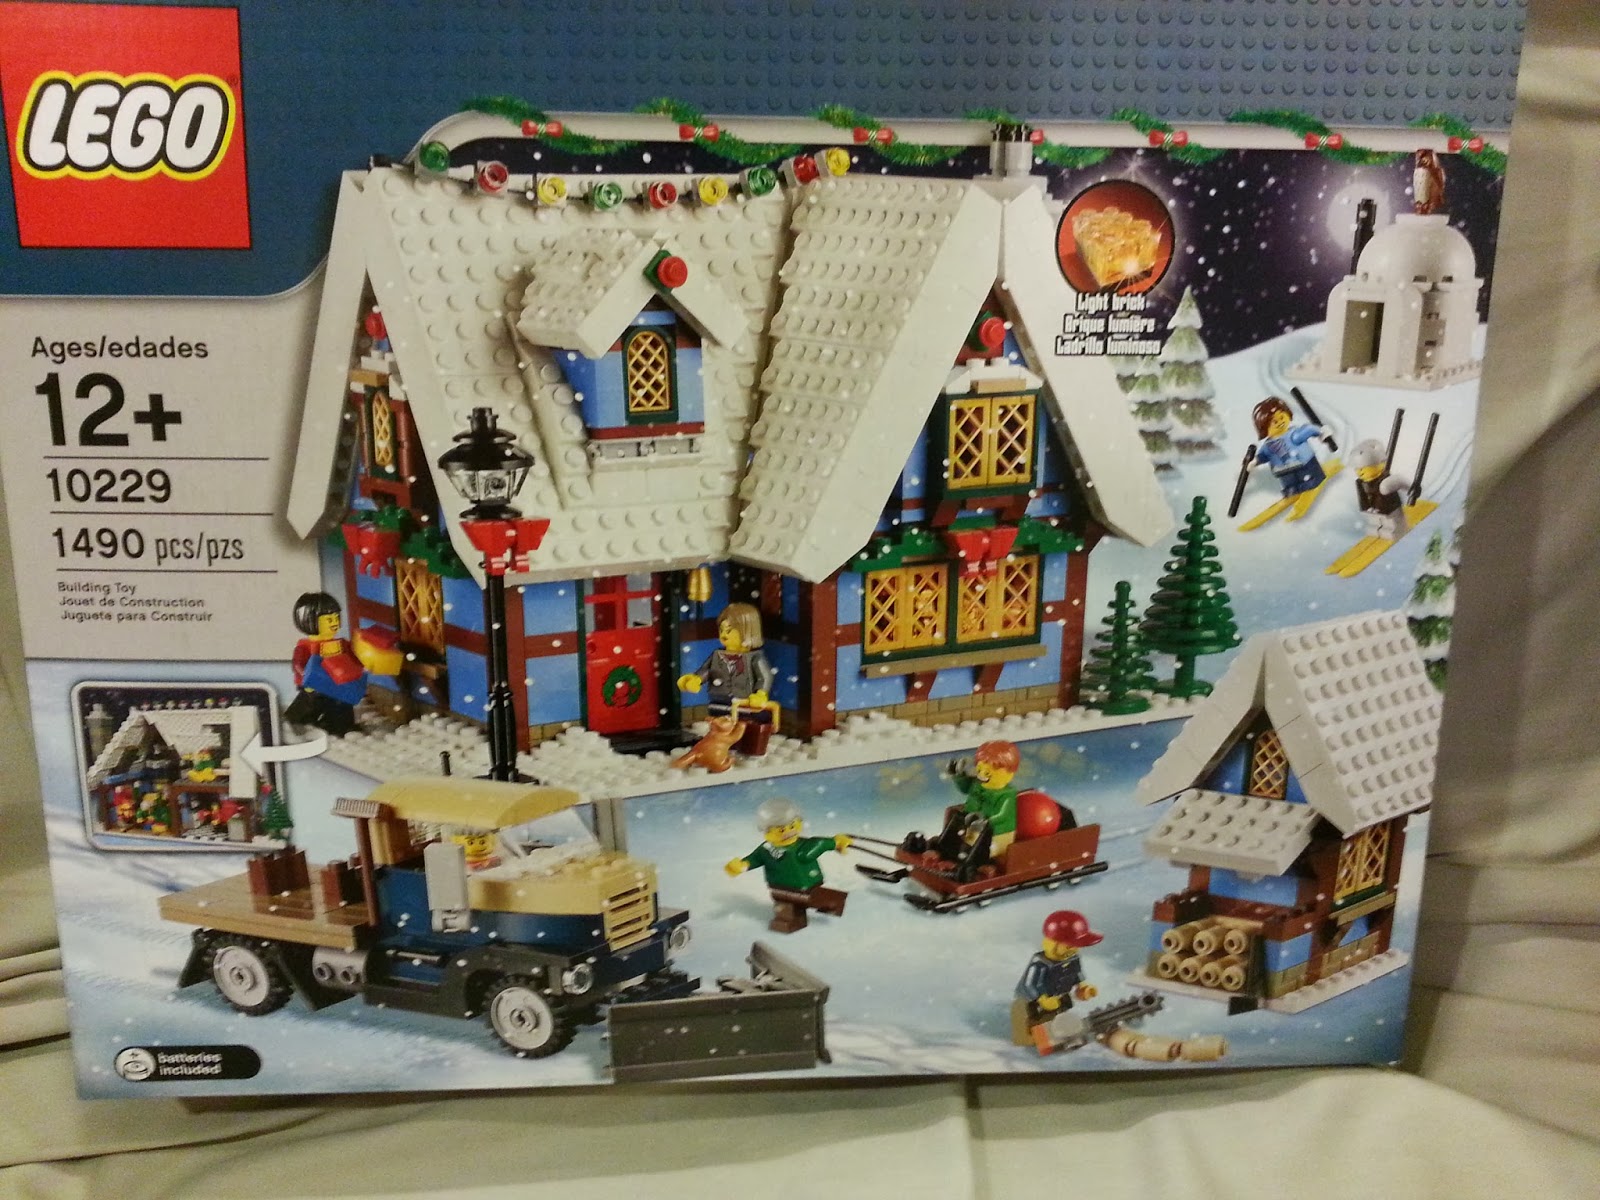 LEGO 10229: Village Cottage - REVIEW